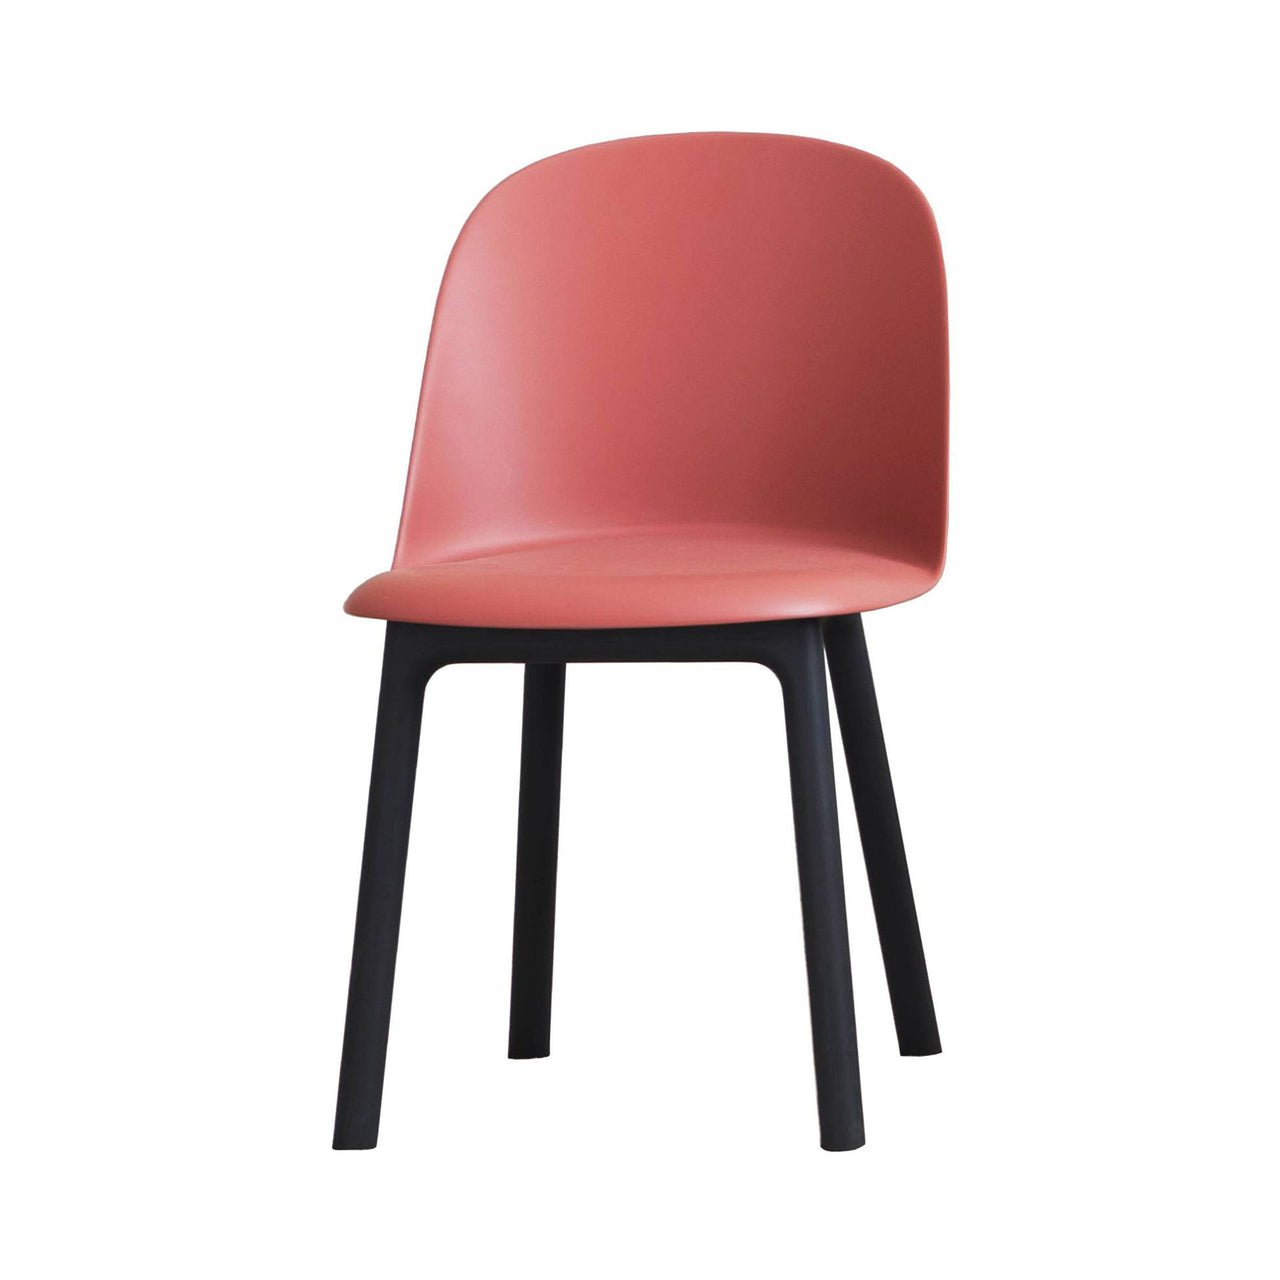 Mariolina Side Chair: Wood Base + Black Ash + Marsala Red